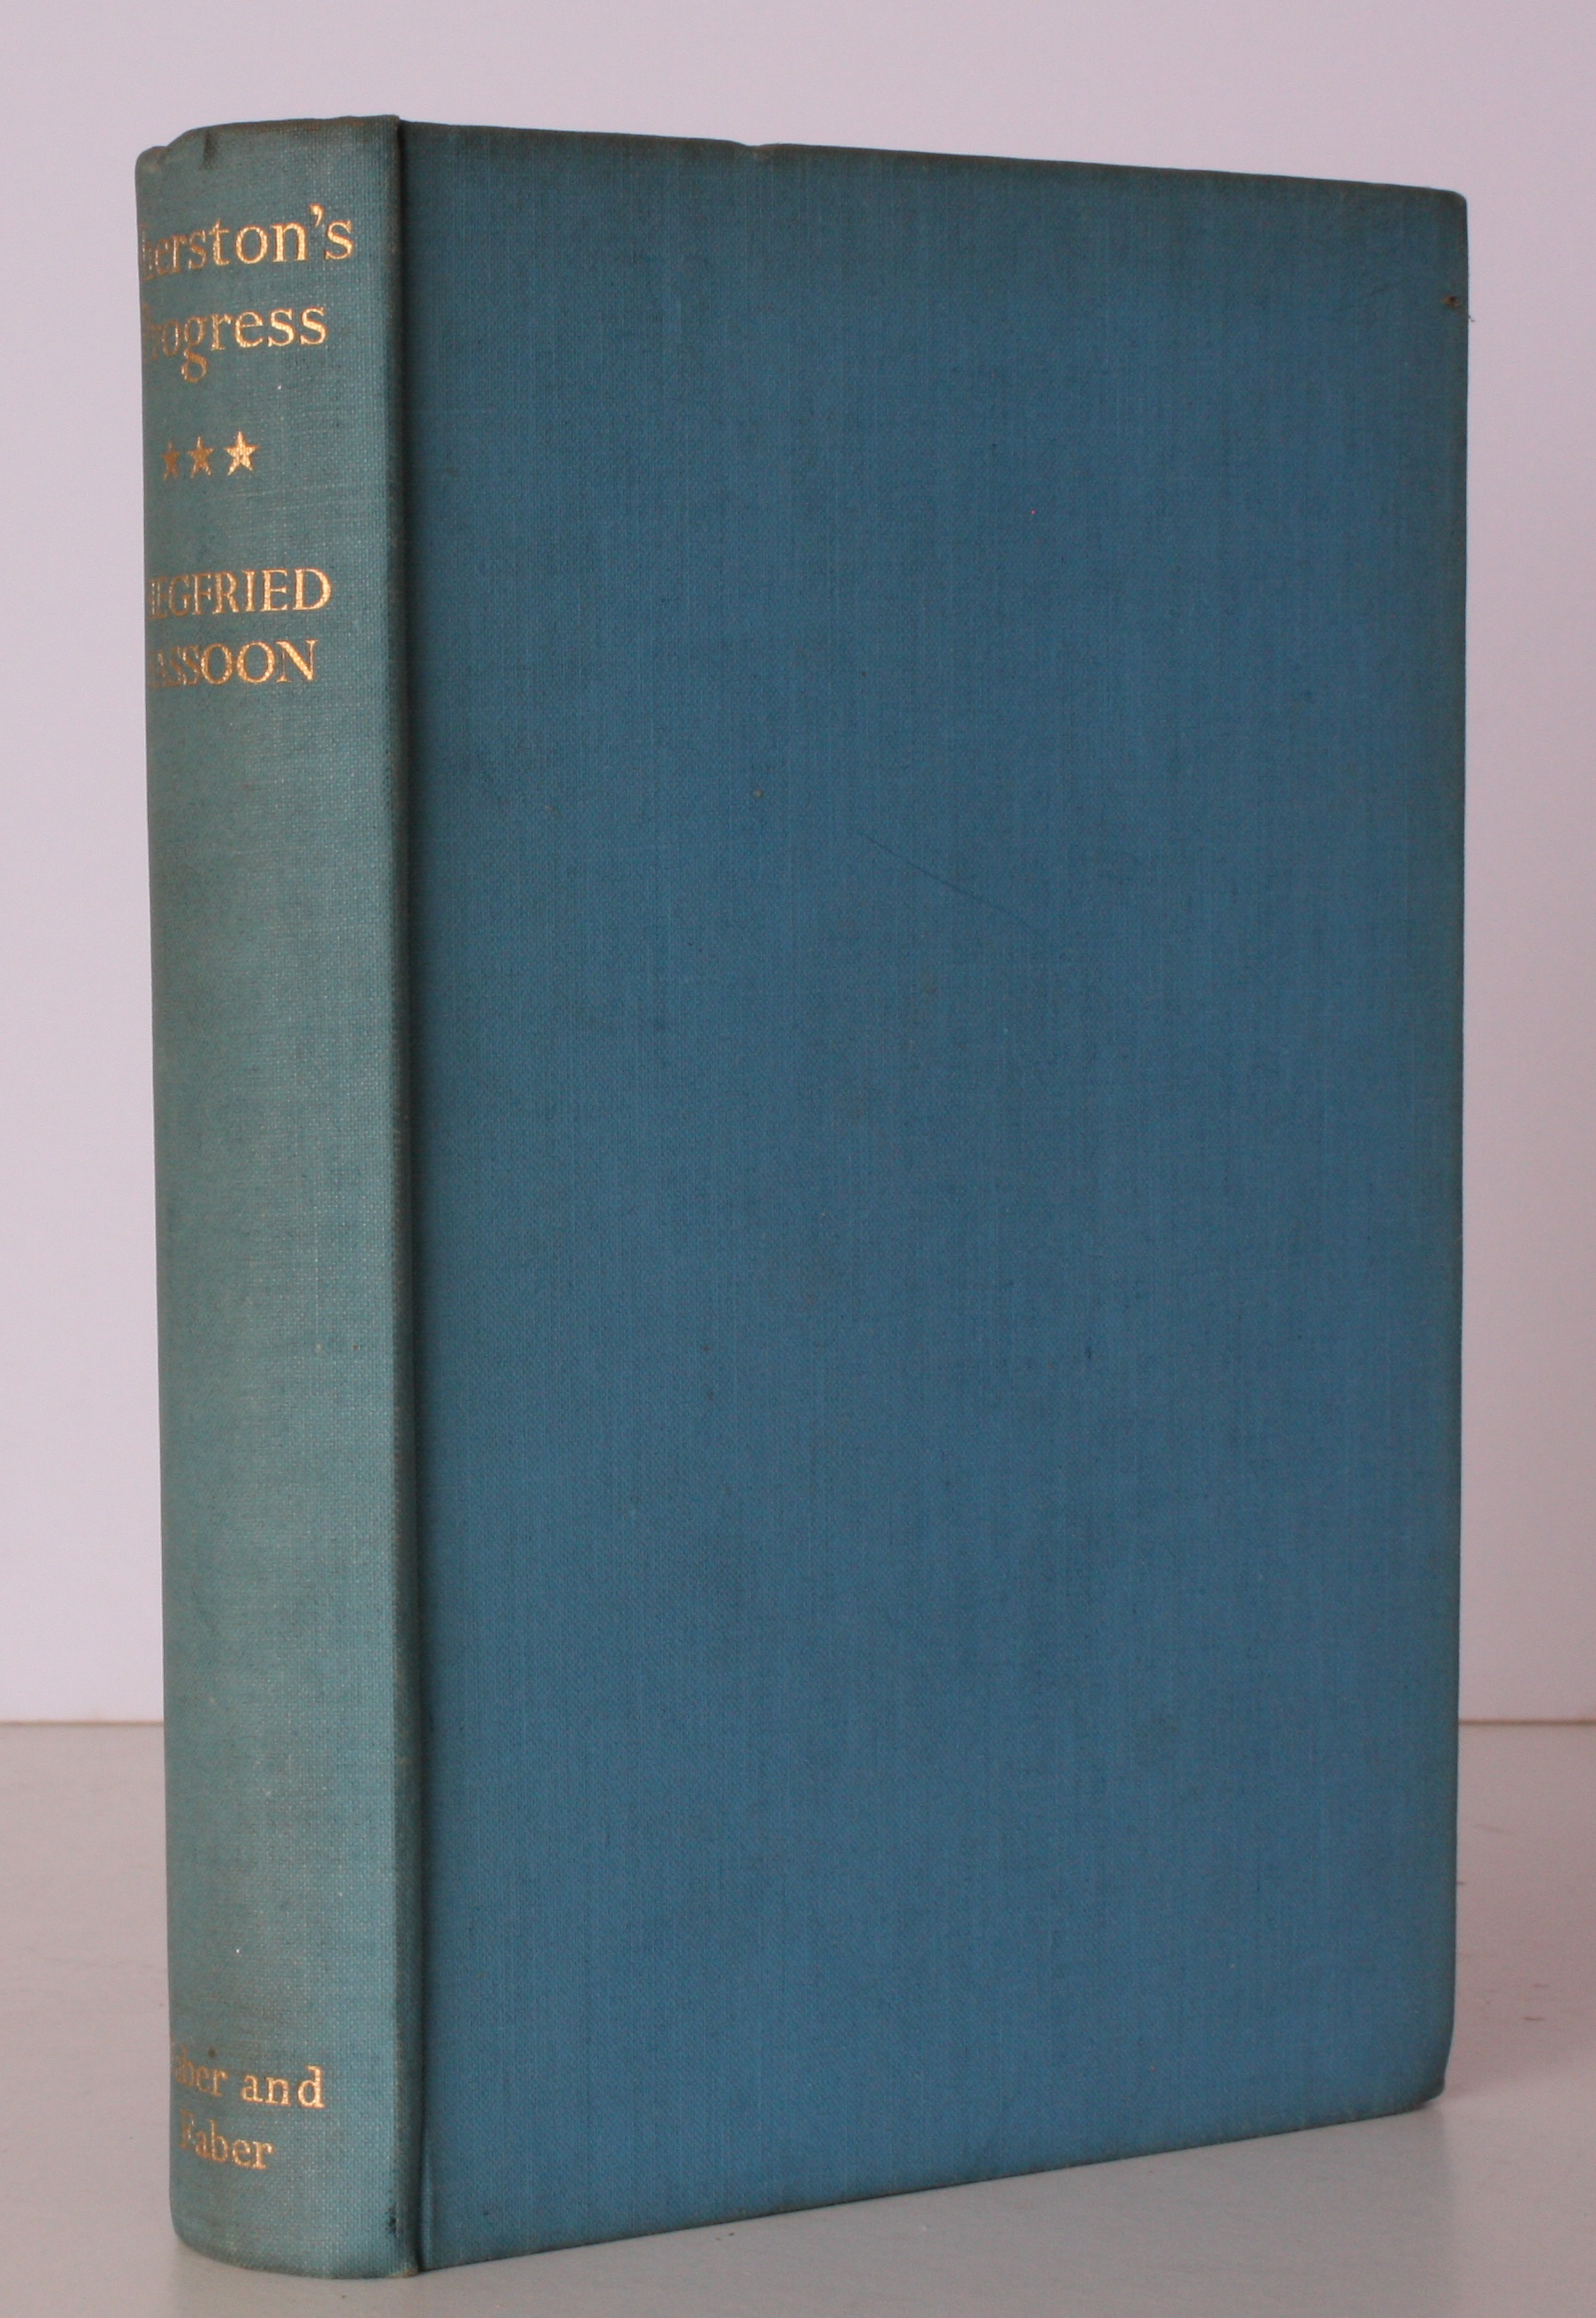 Sherston's Progress. BRIGHT, CLEAN COPY by SASSOON Siegfried: (1936 ...